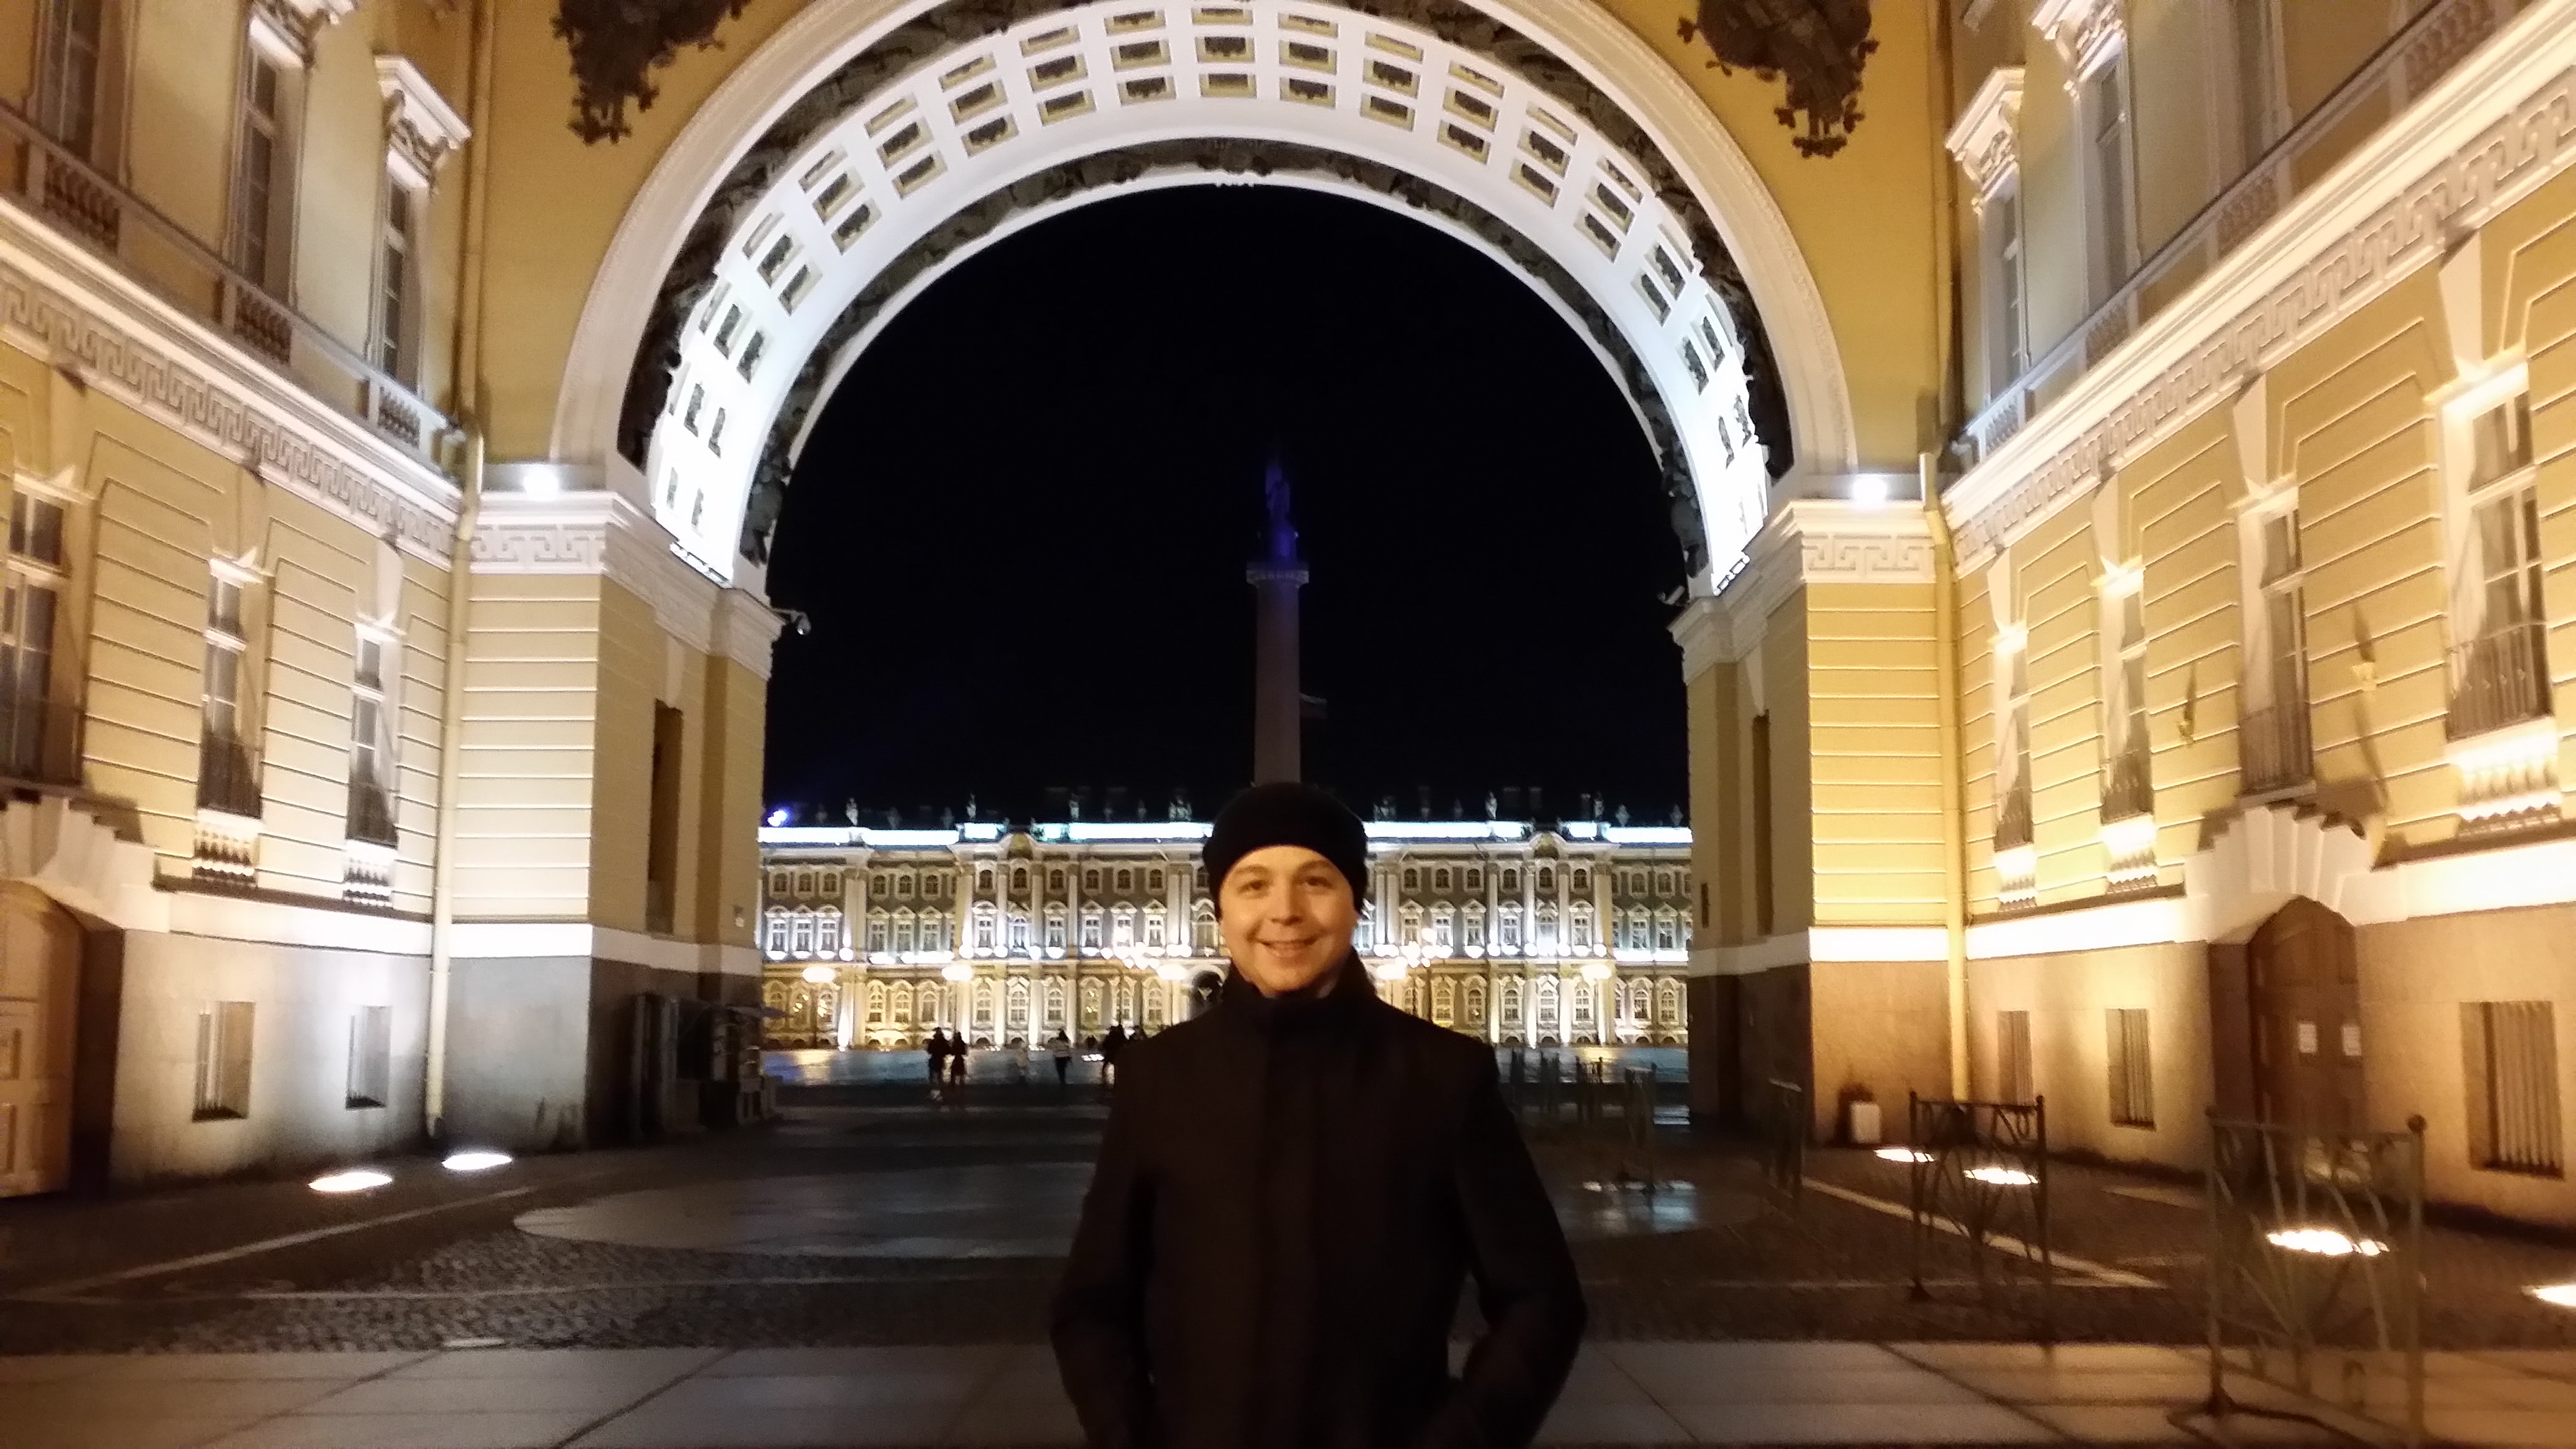 Дворцовая площадь, Санкт-Петербург